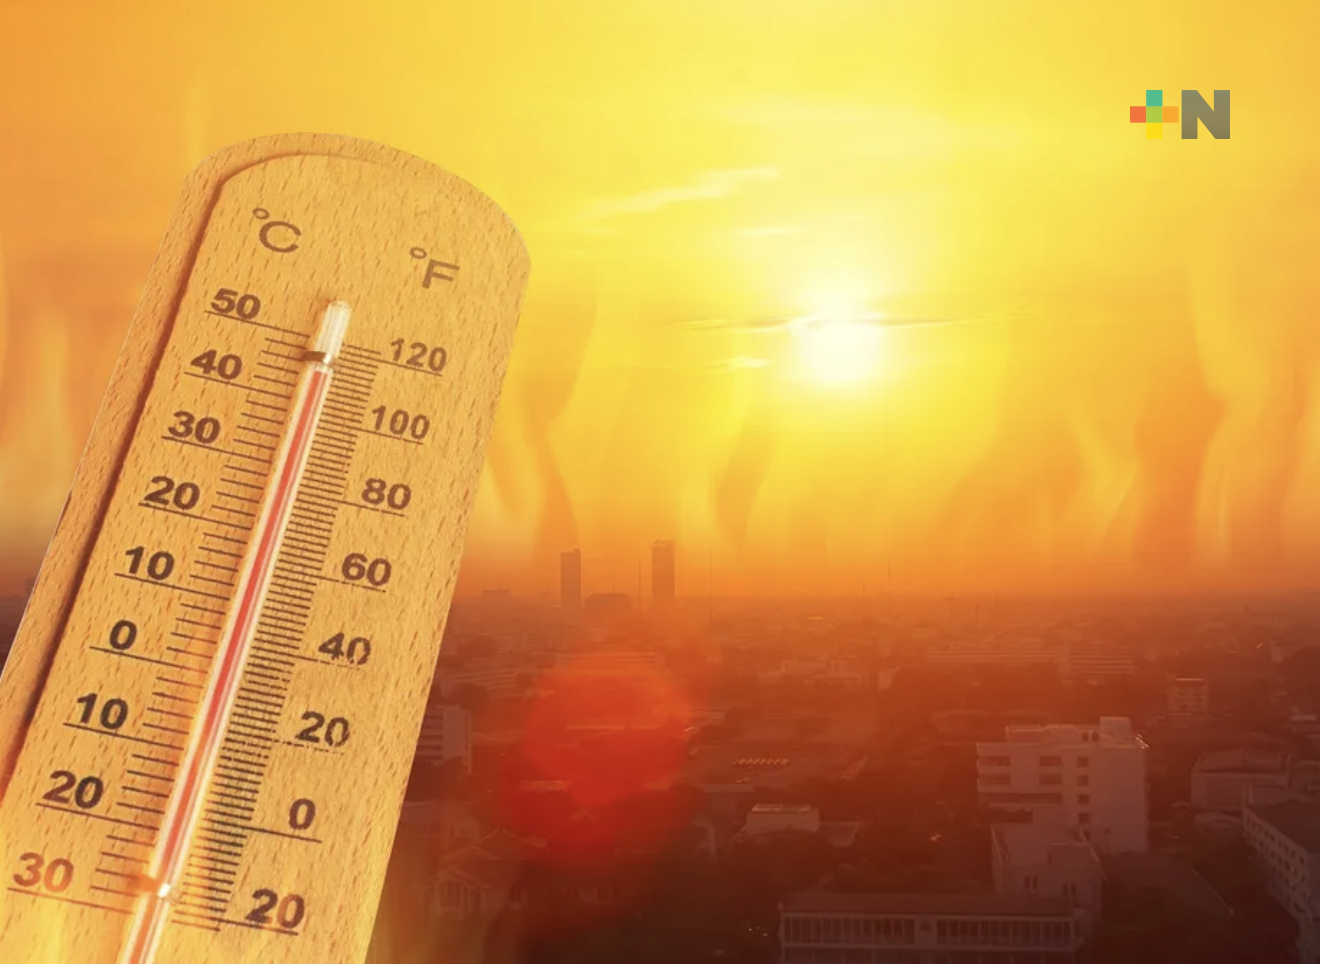 Onda de calor ocasionará temperaturas superiores a 40 grados en 23 estados: Conagua